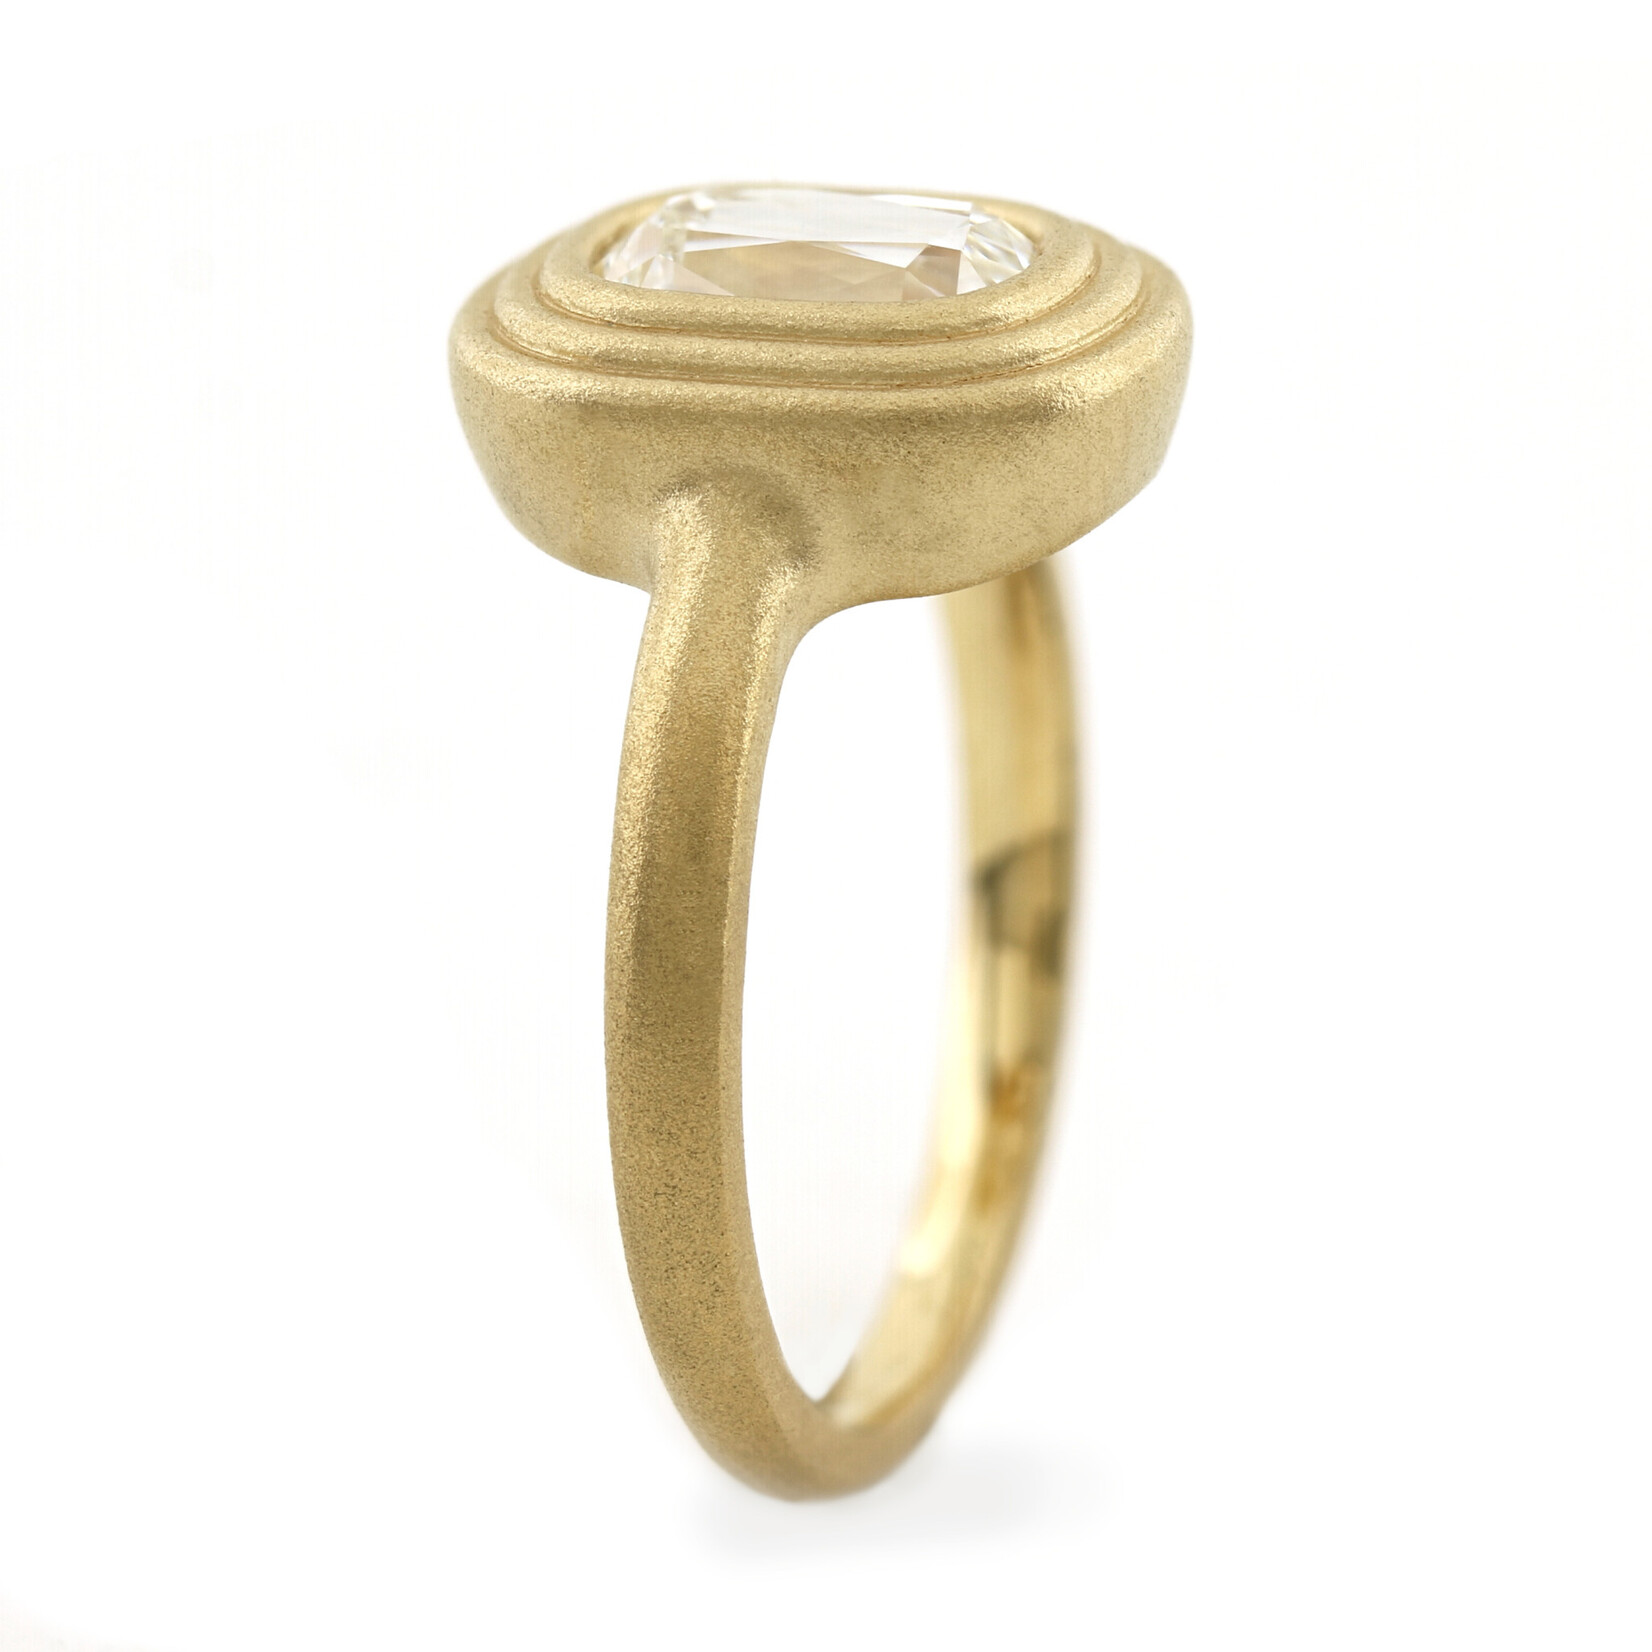 Baxter Moerman Ripple Signet Ring with Scissor Cut Diamond